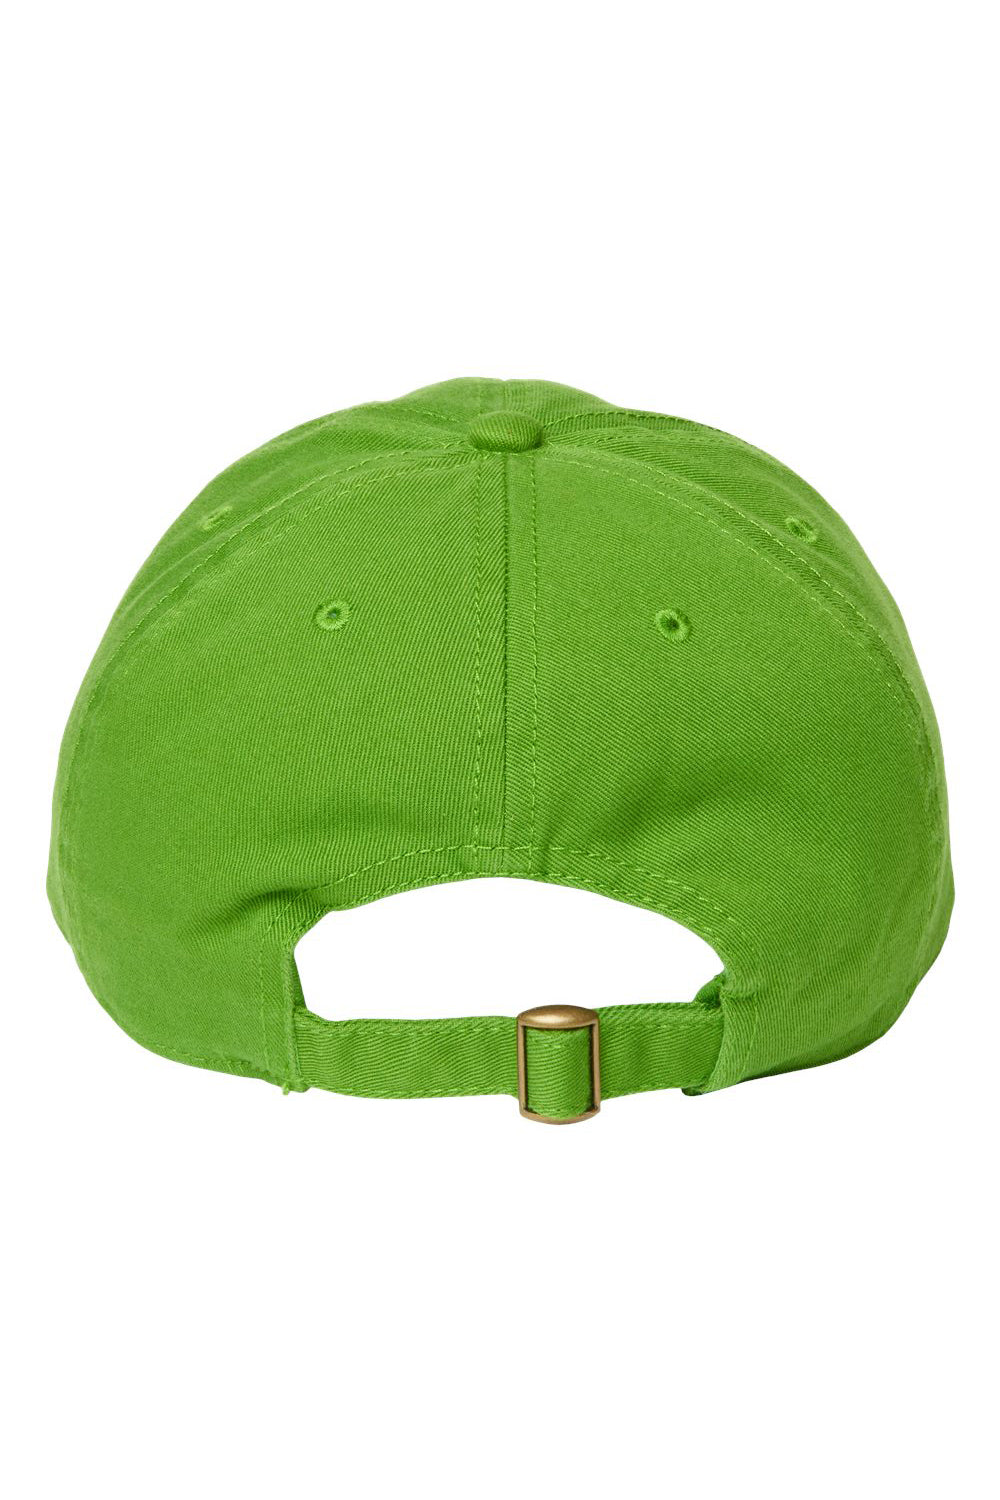 Cap America i1002 Mens Relaxed Adjustable Dad Hat Irish Green Flat Back